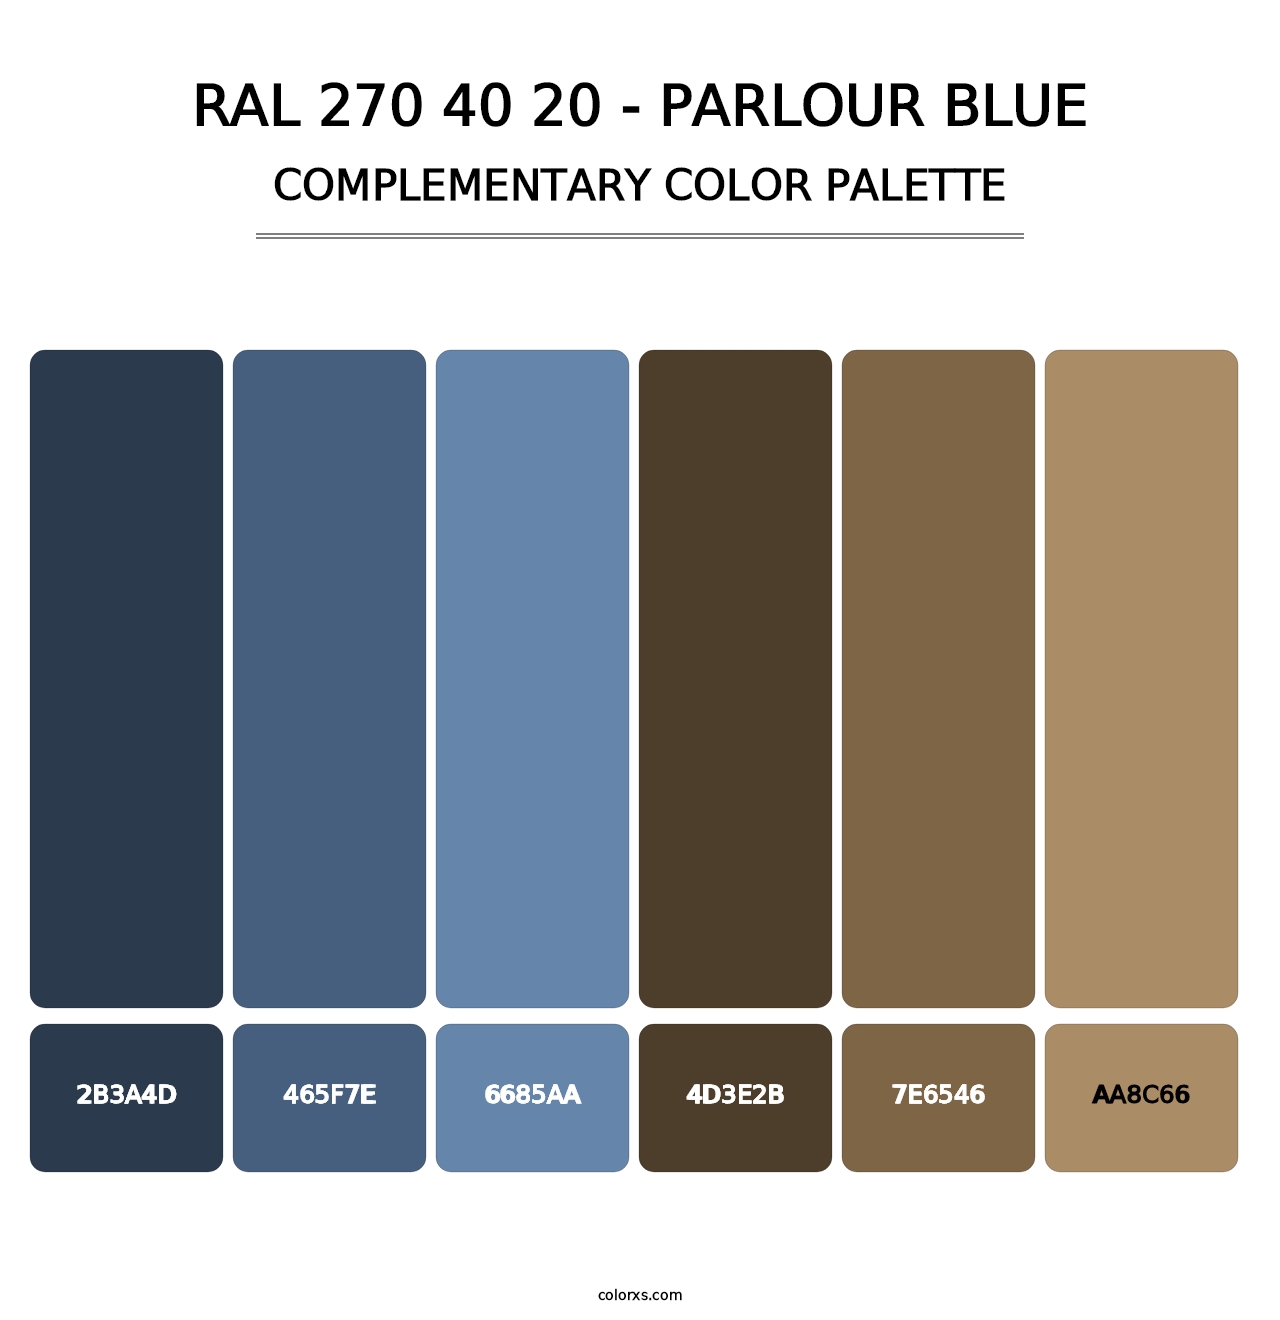 RAL 270 40 20 - Parlour Blue - Complementary Color Palette